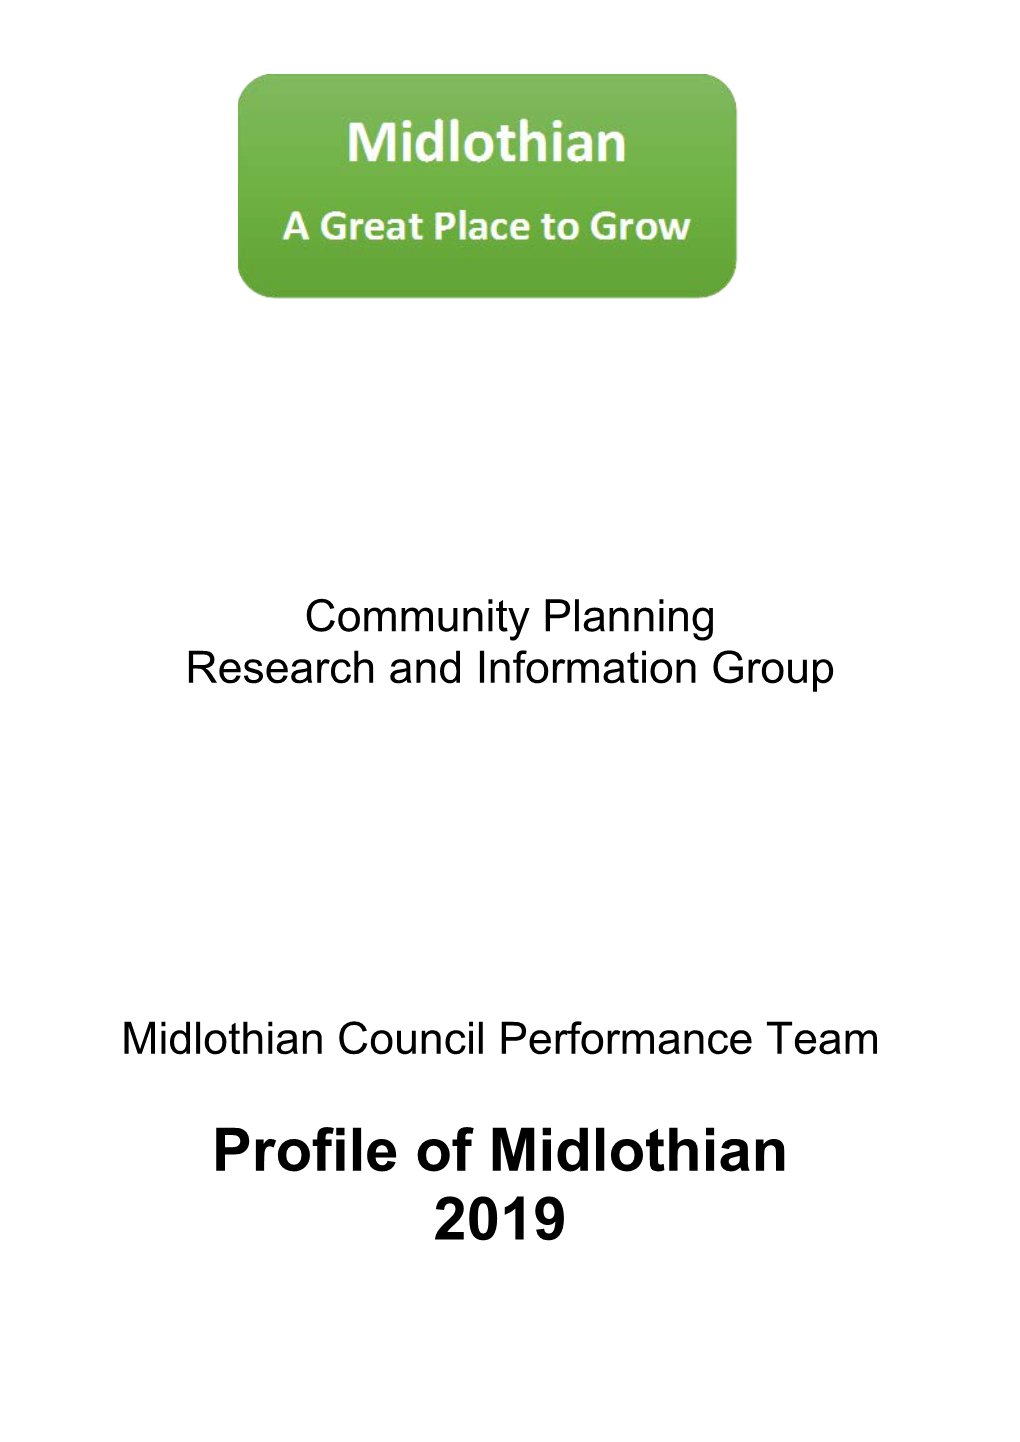 Profile of Midlothian 2019, PDF 4.27 MB Download